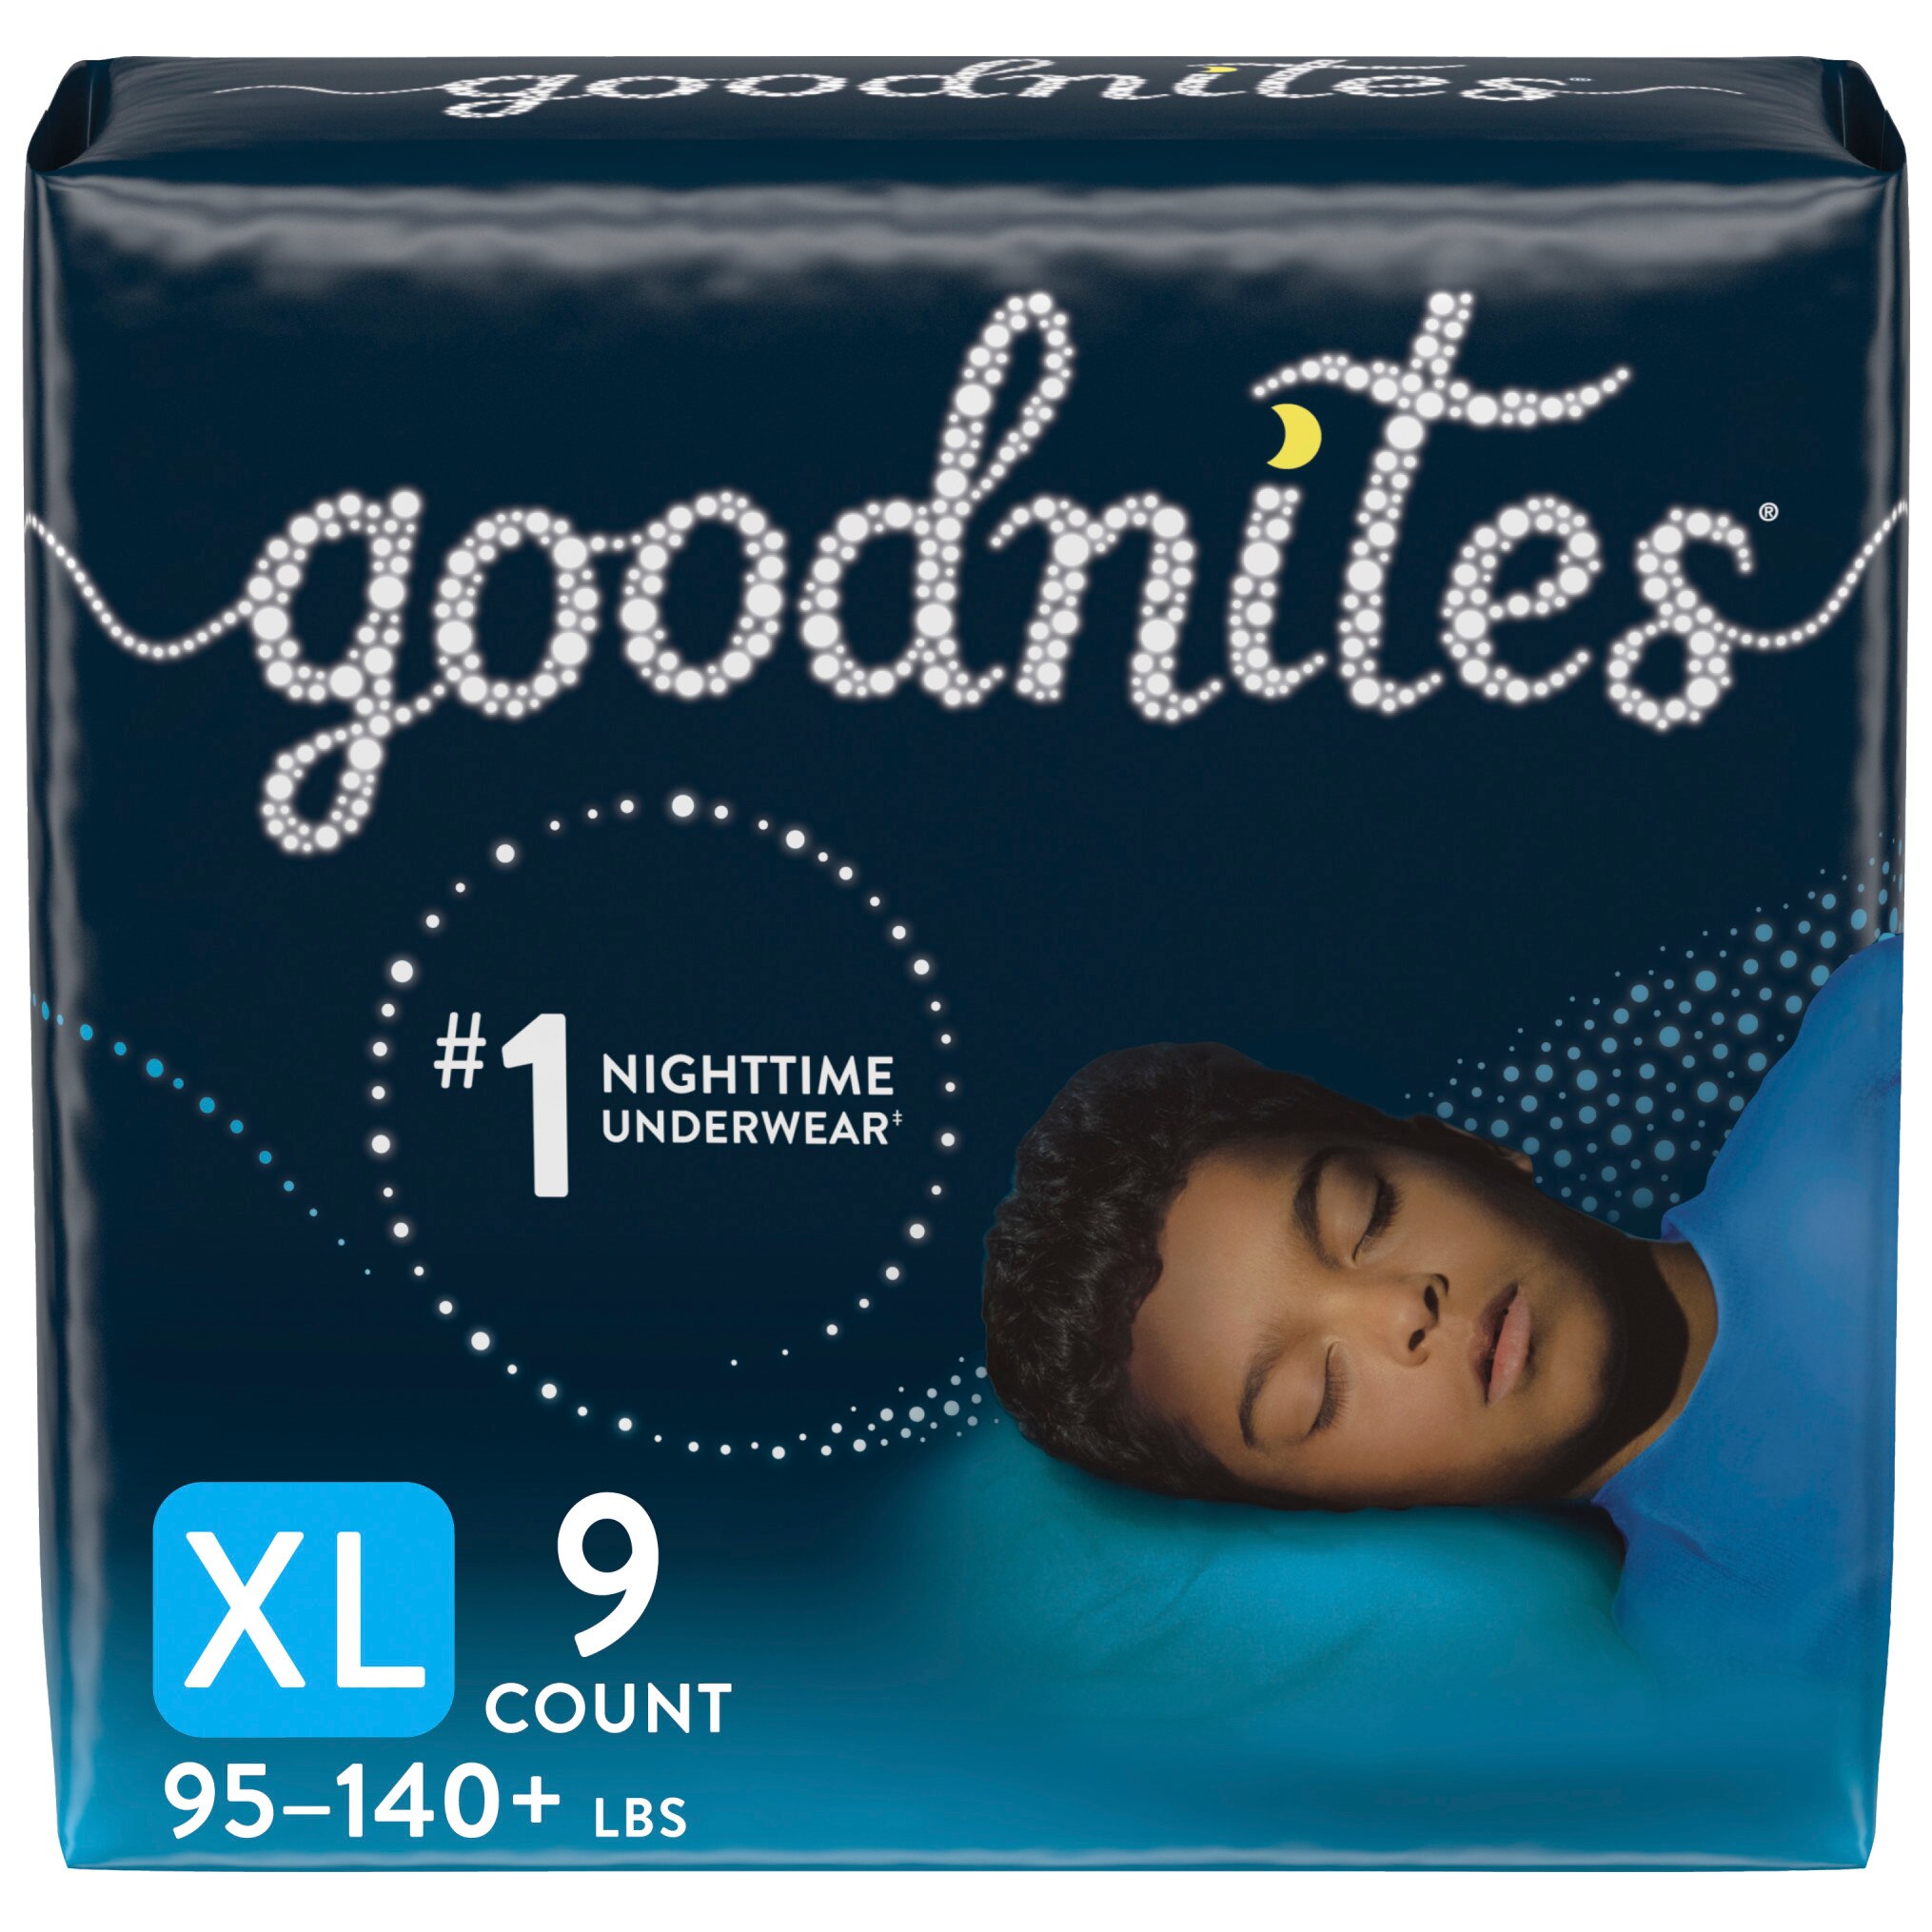 Goodnites Nighttime Bedwetting Underwear, XL (95-140 lb.), 9 CT